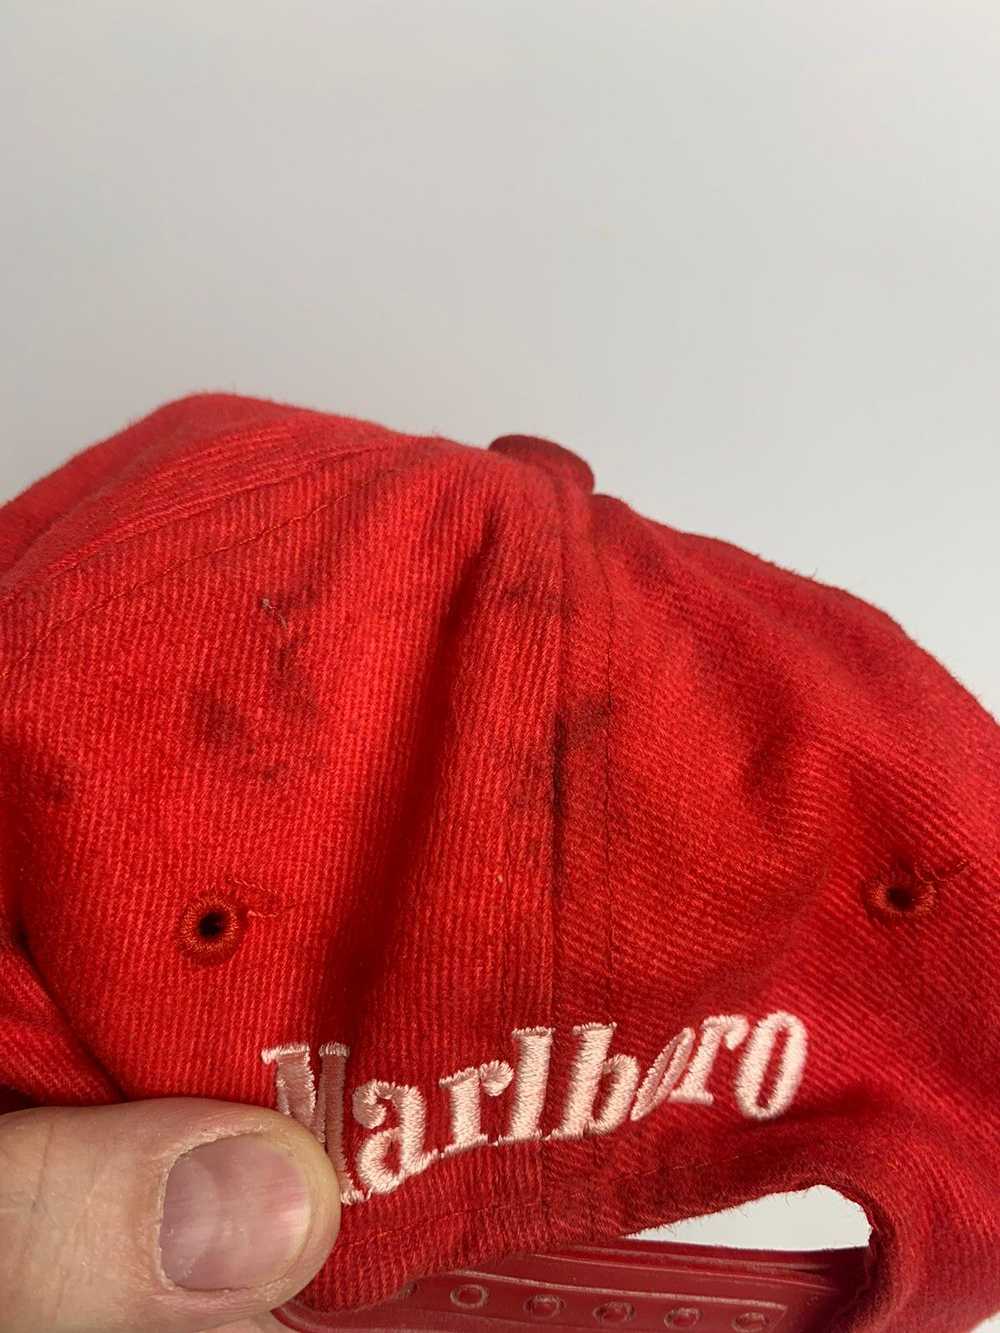 Marlboro × Vintage Vintage cap Marlboro rare red - image 8